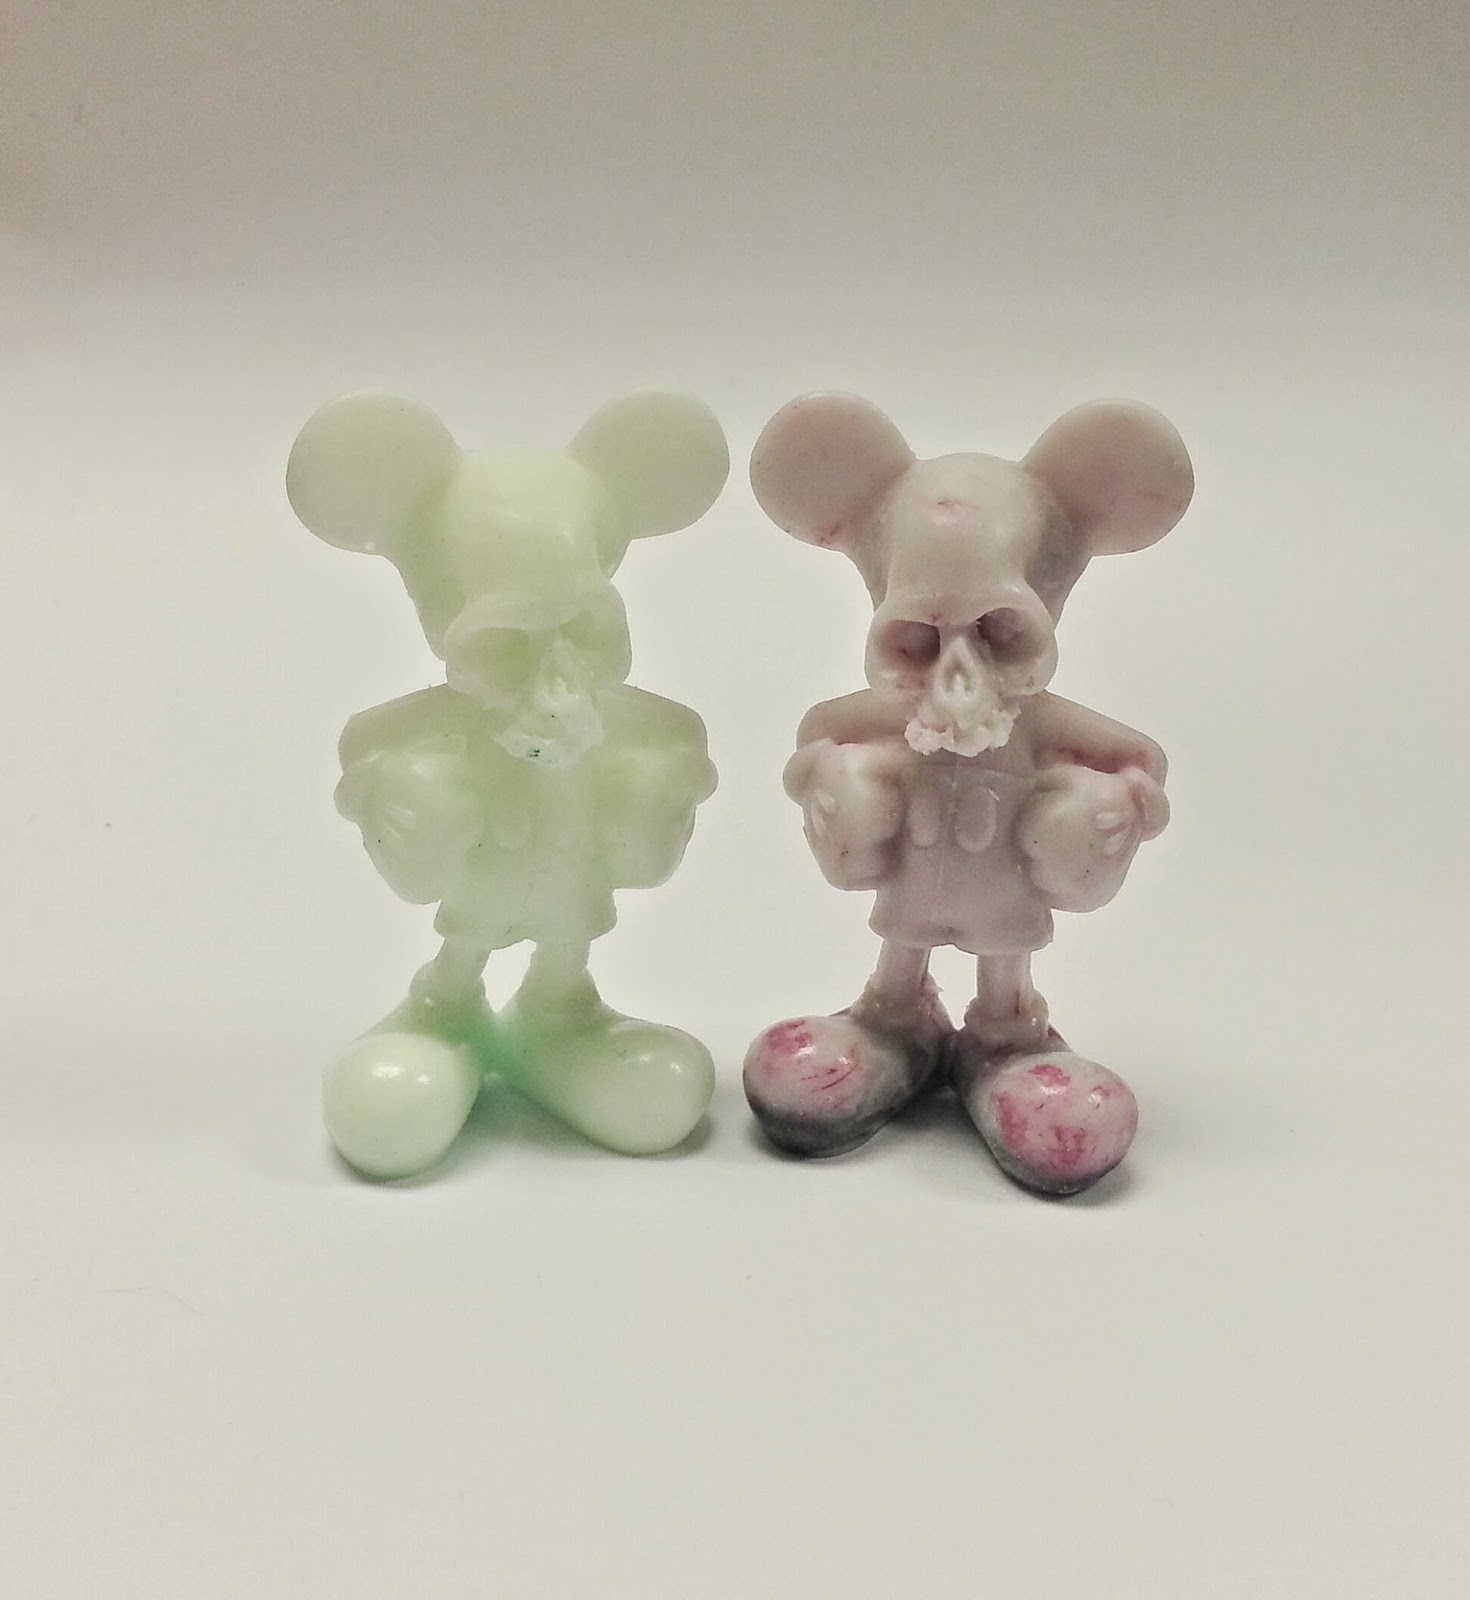 “Deadey Mouse” Bootleg Disney Resin Figure by Motorbot